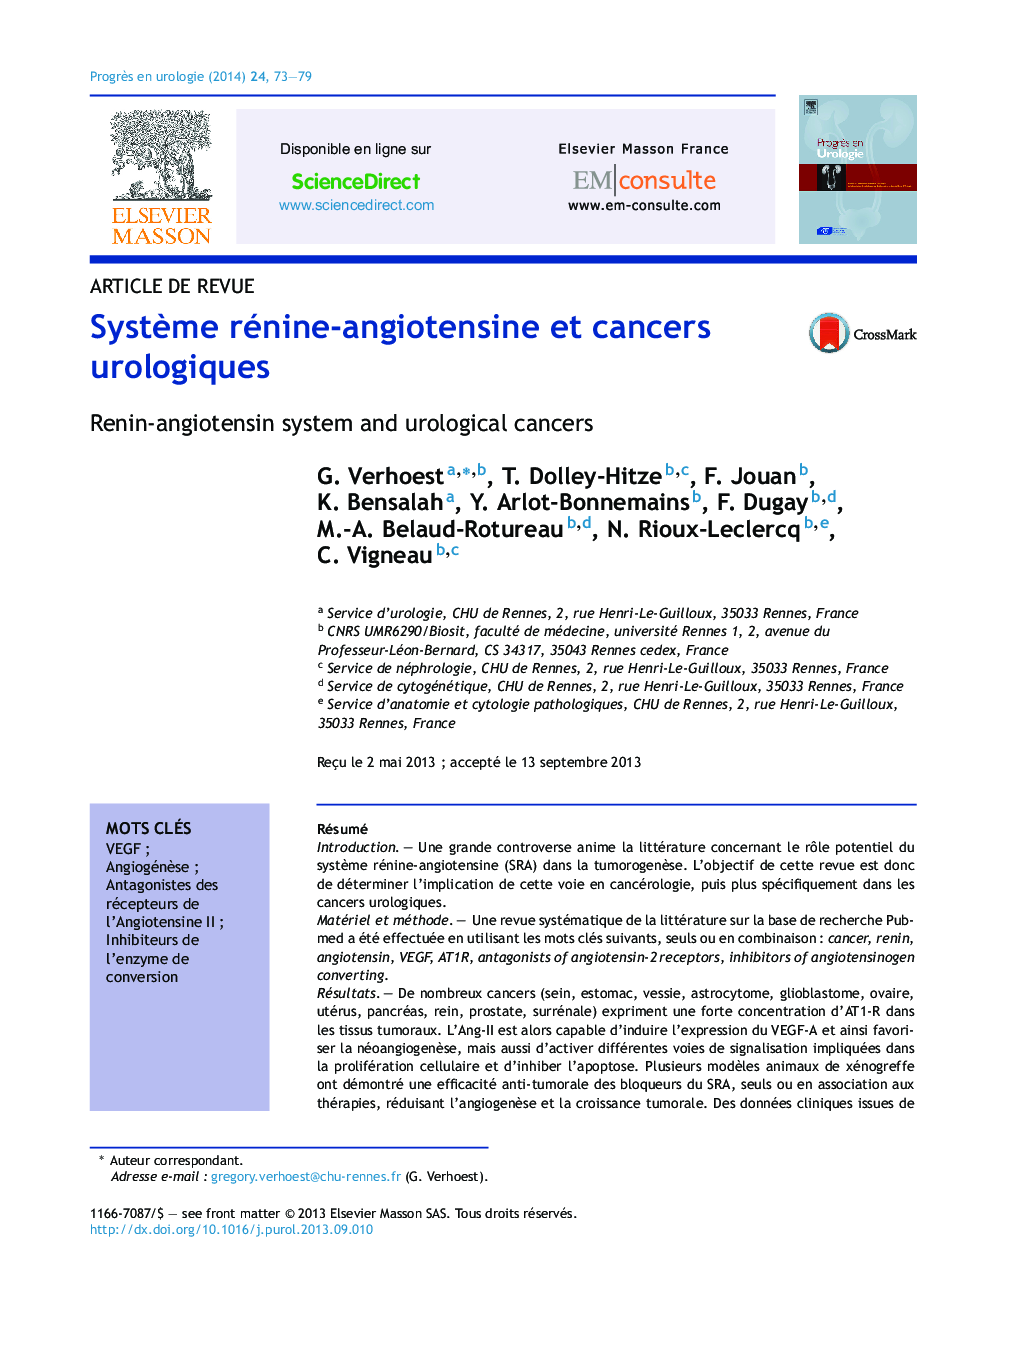 Système rénine-angiotensine et cancers urologiques